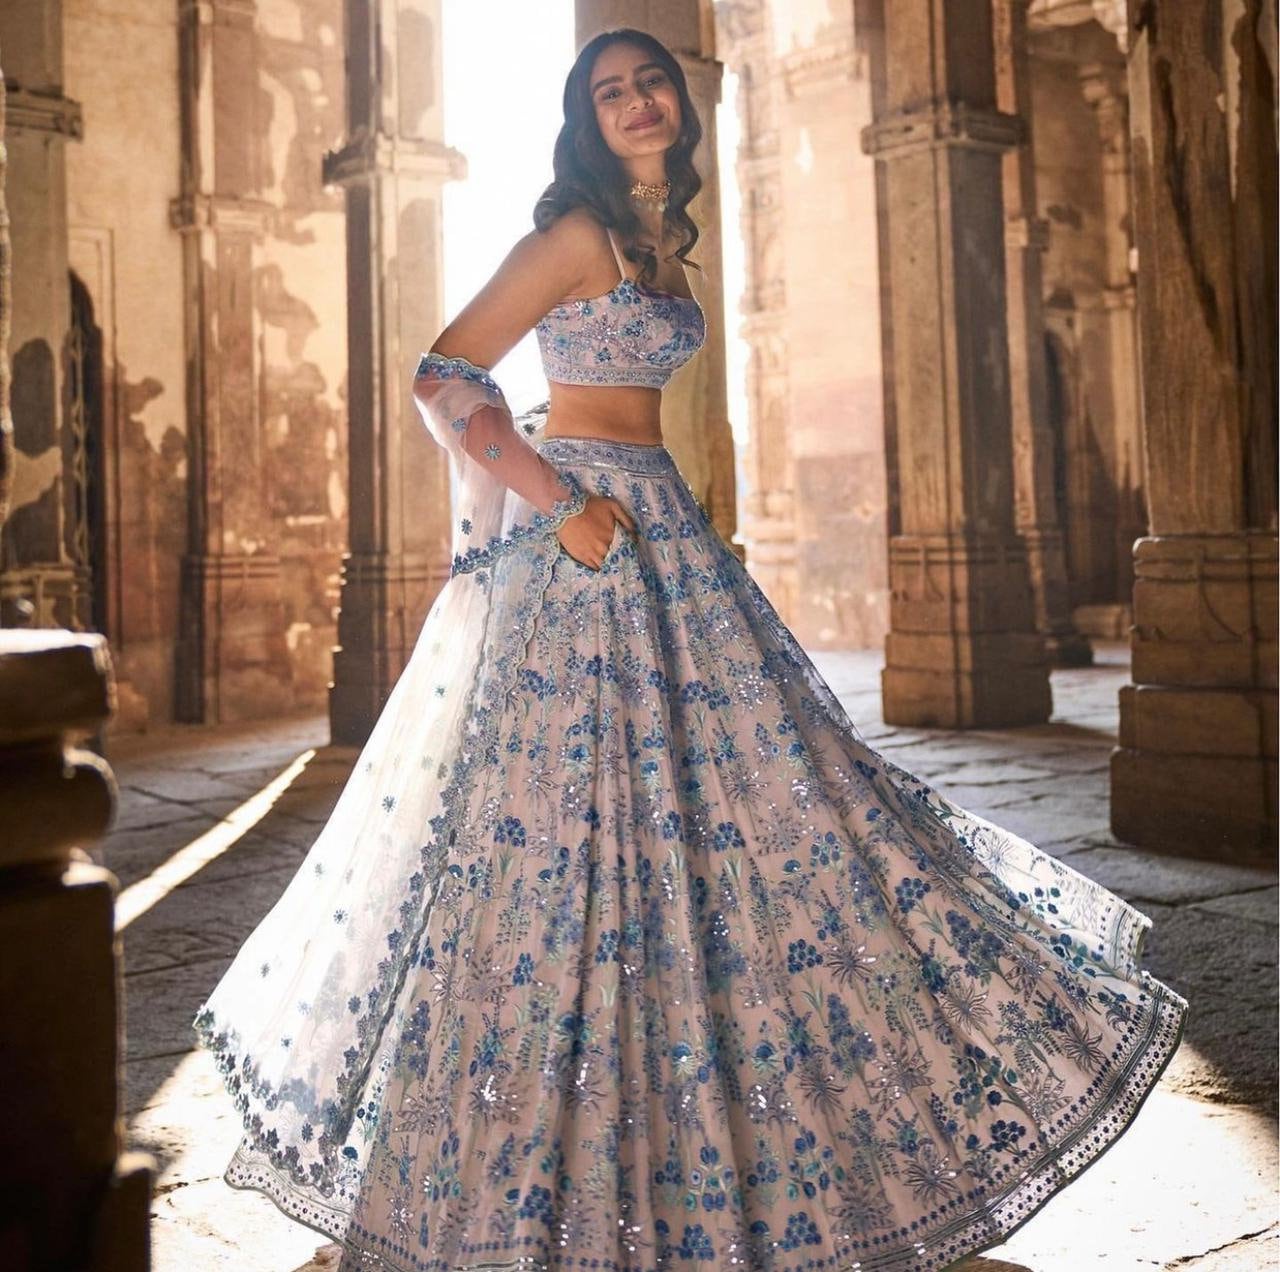 Designer Lehenga Choli for Women Party Wear Bollywood Lengha Sari